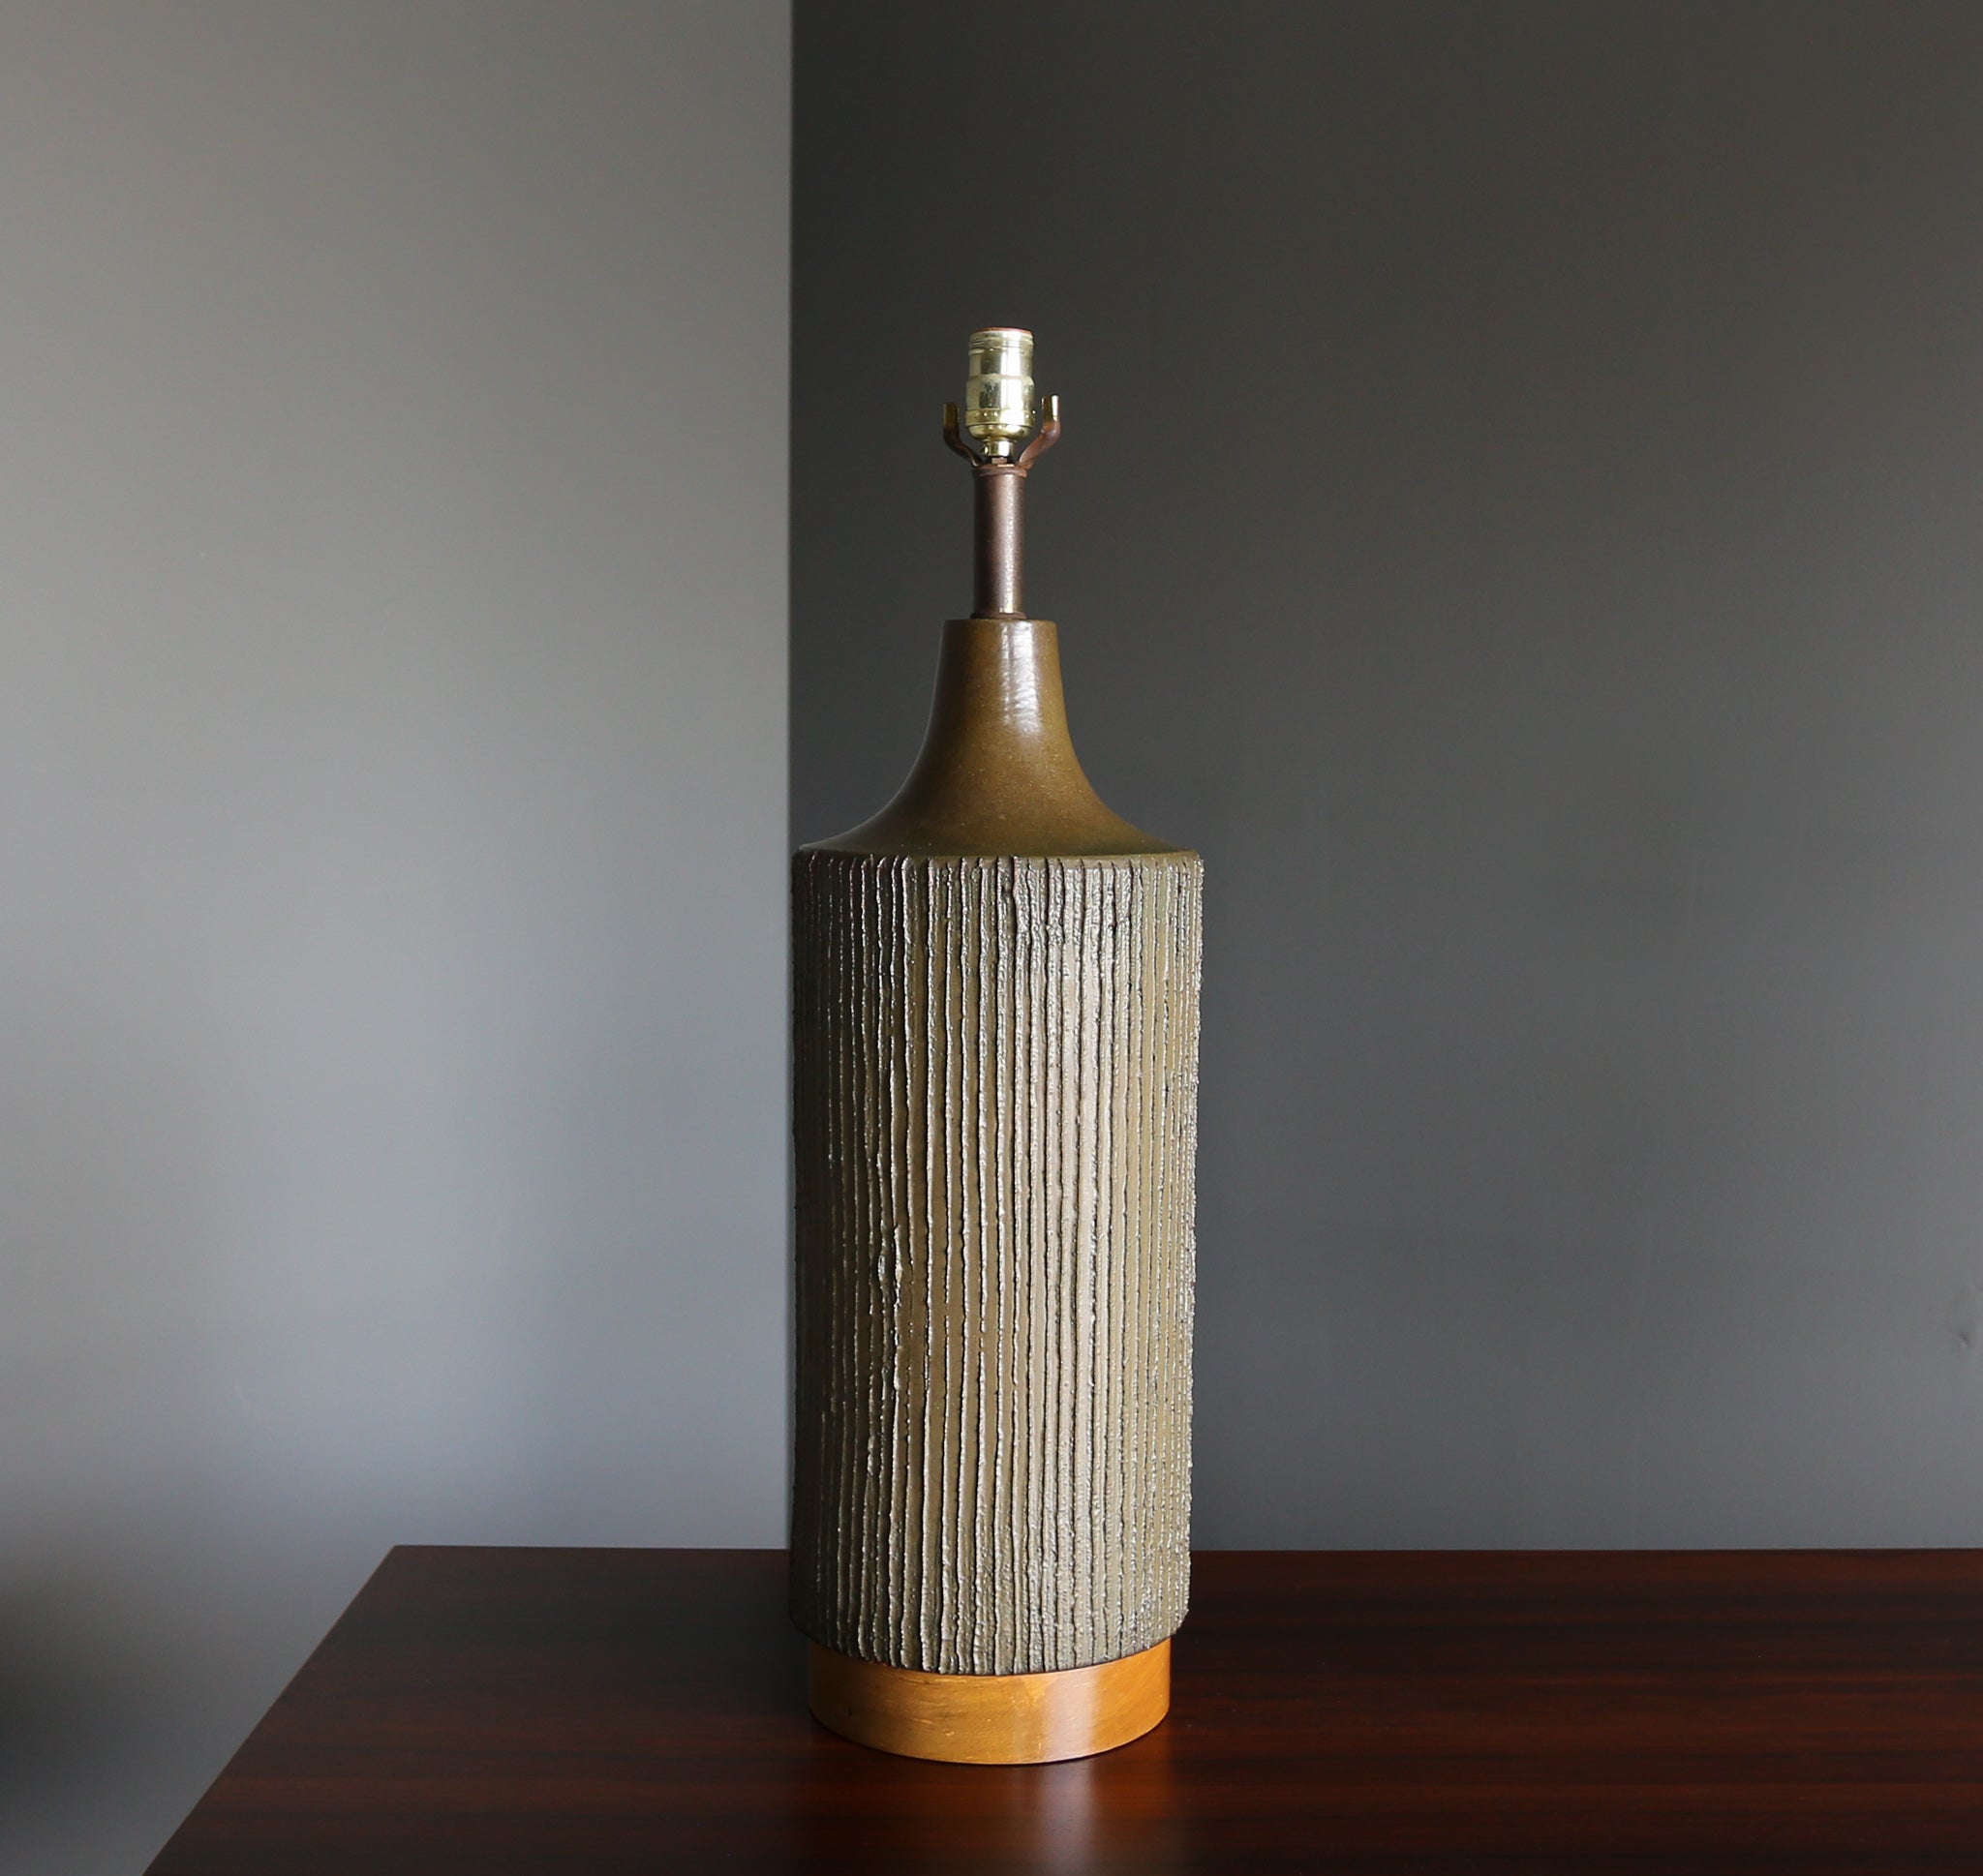 = SOLD = Large Scale David Cressey Ceramic Lamps, circa 1970